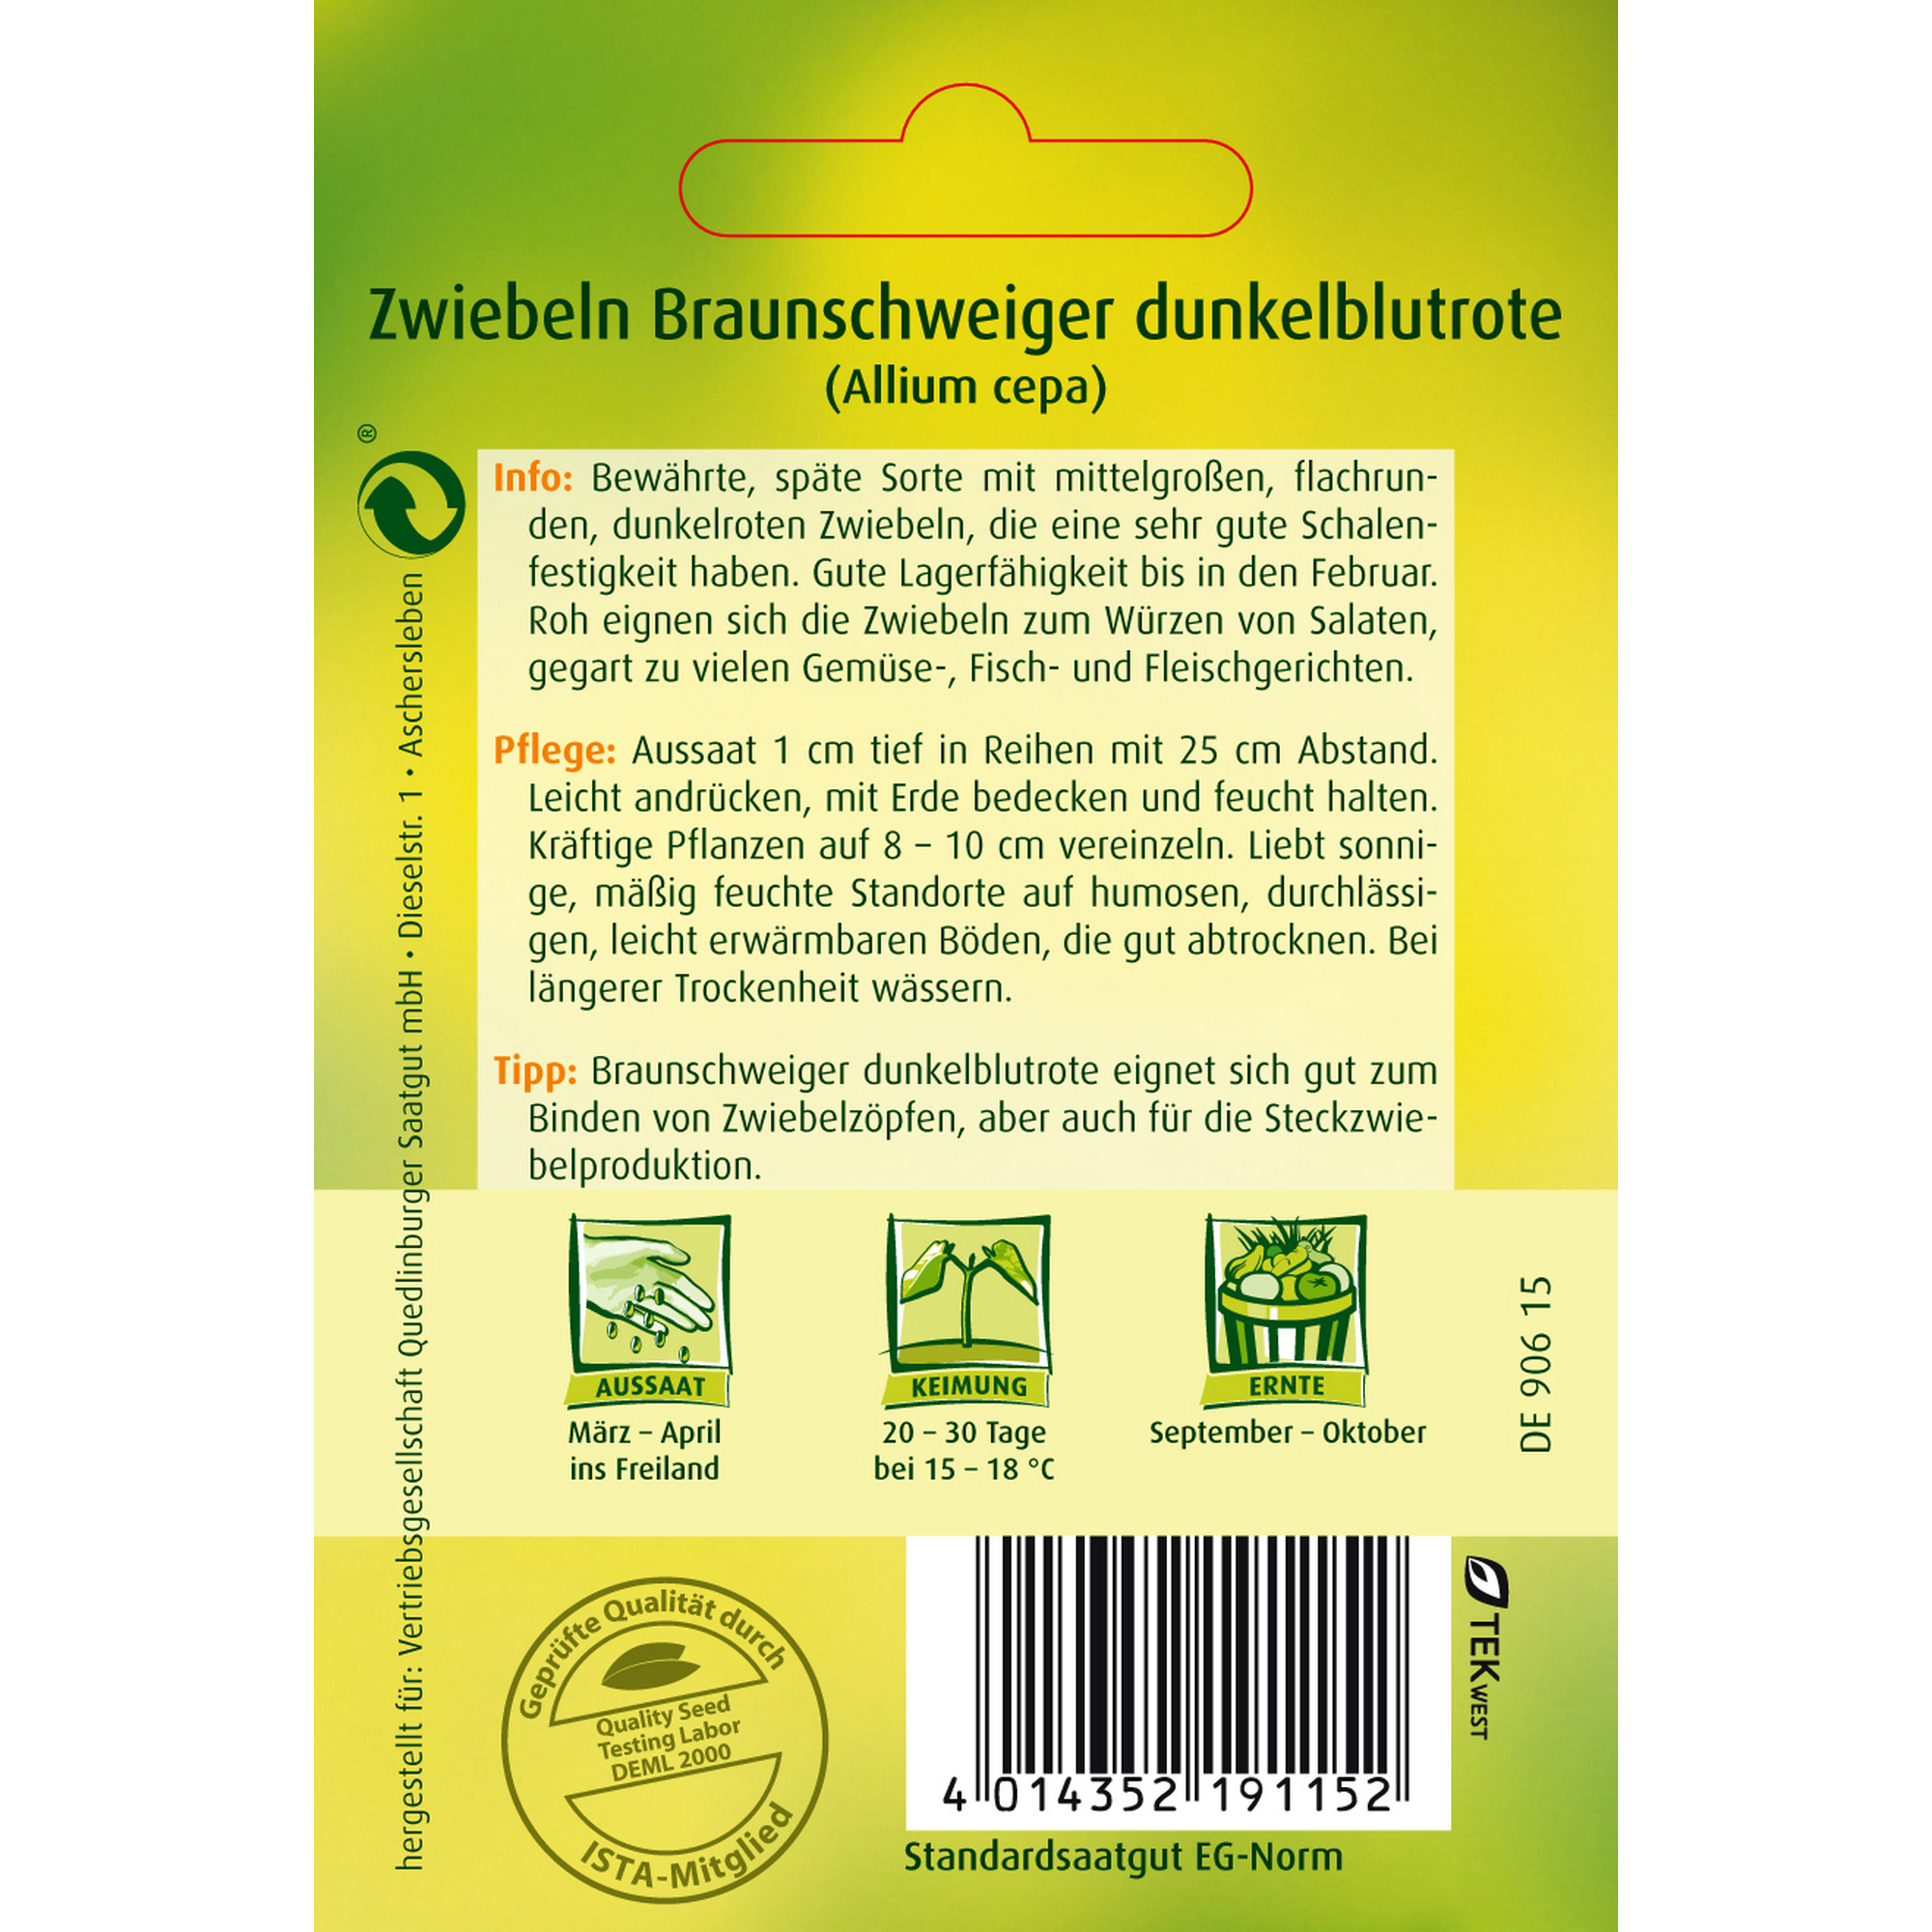 Zwiebel 'Braunschweiger dunkelblutrote' + product picture